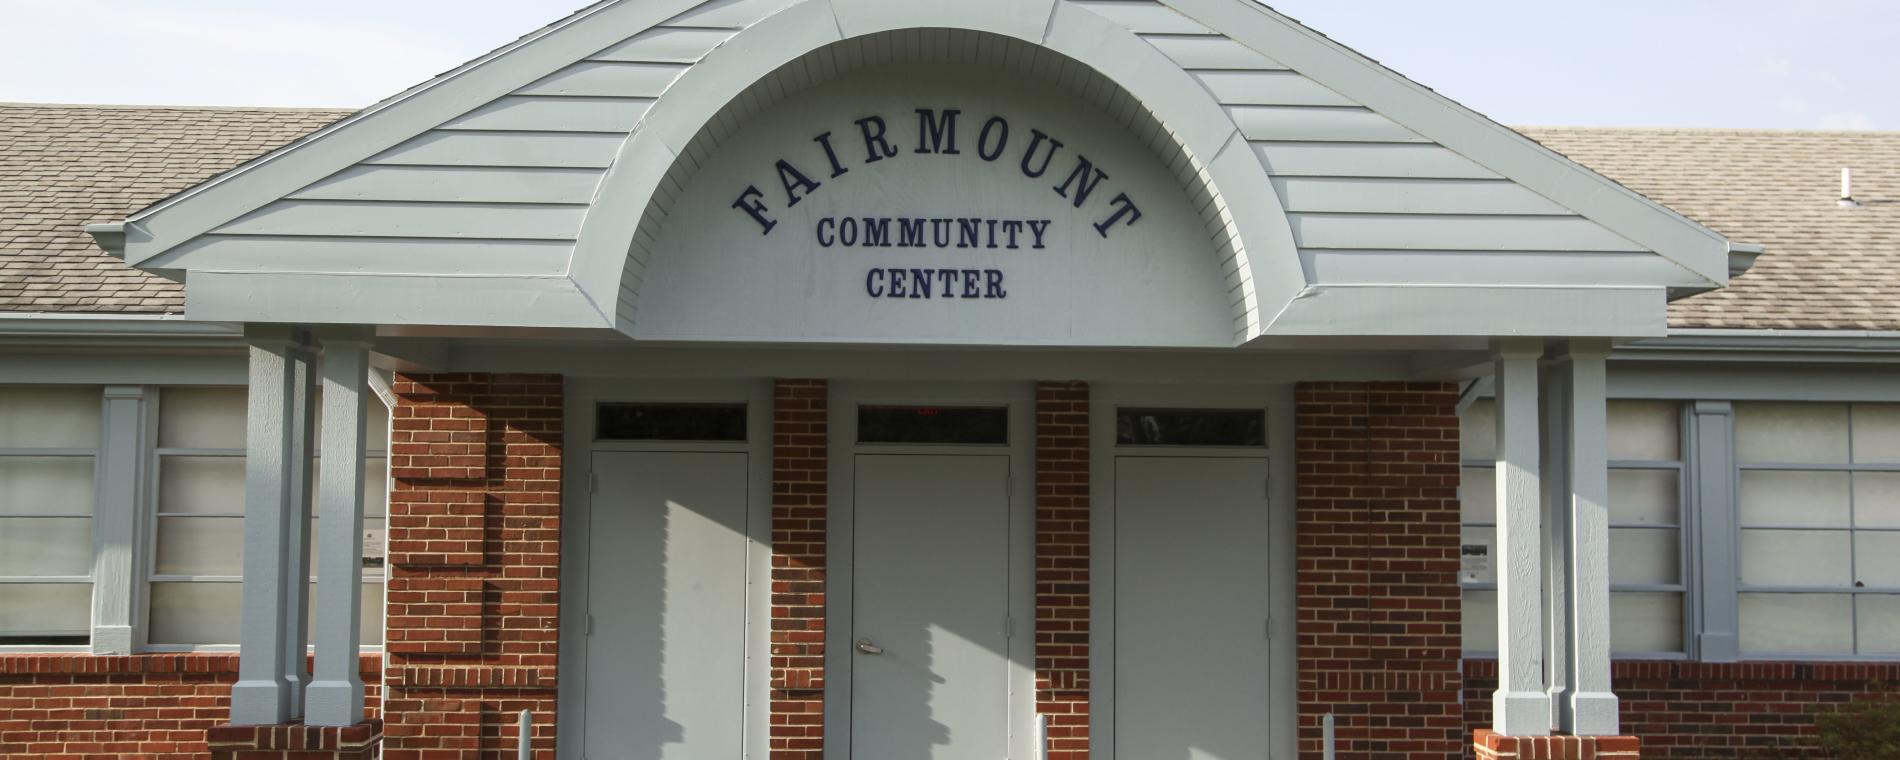 Fairmount Park Community Center